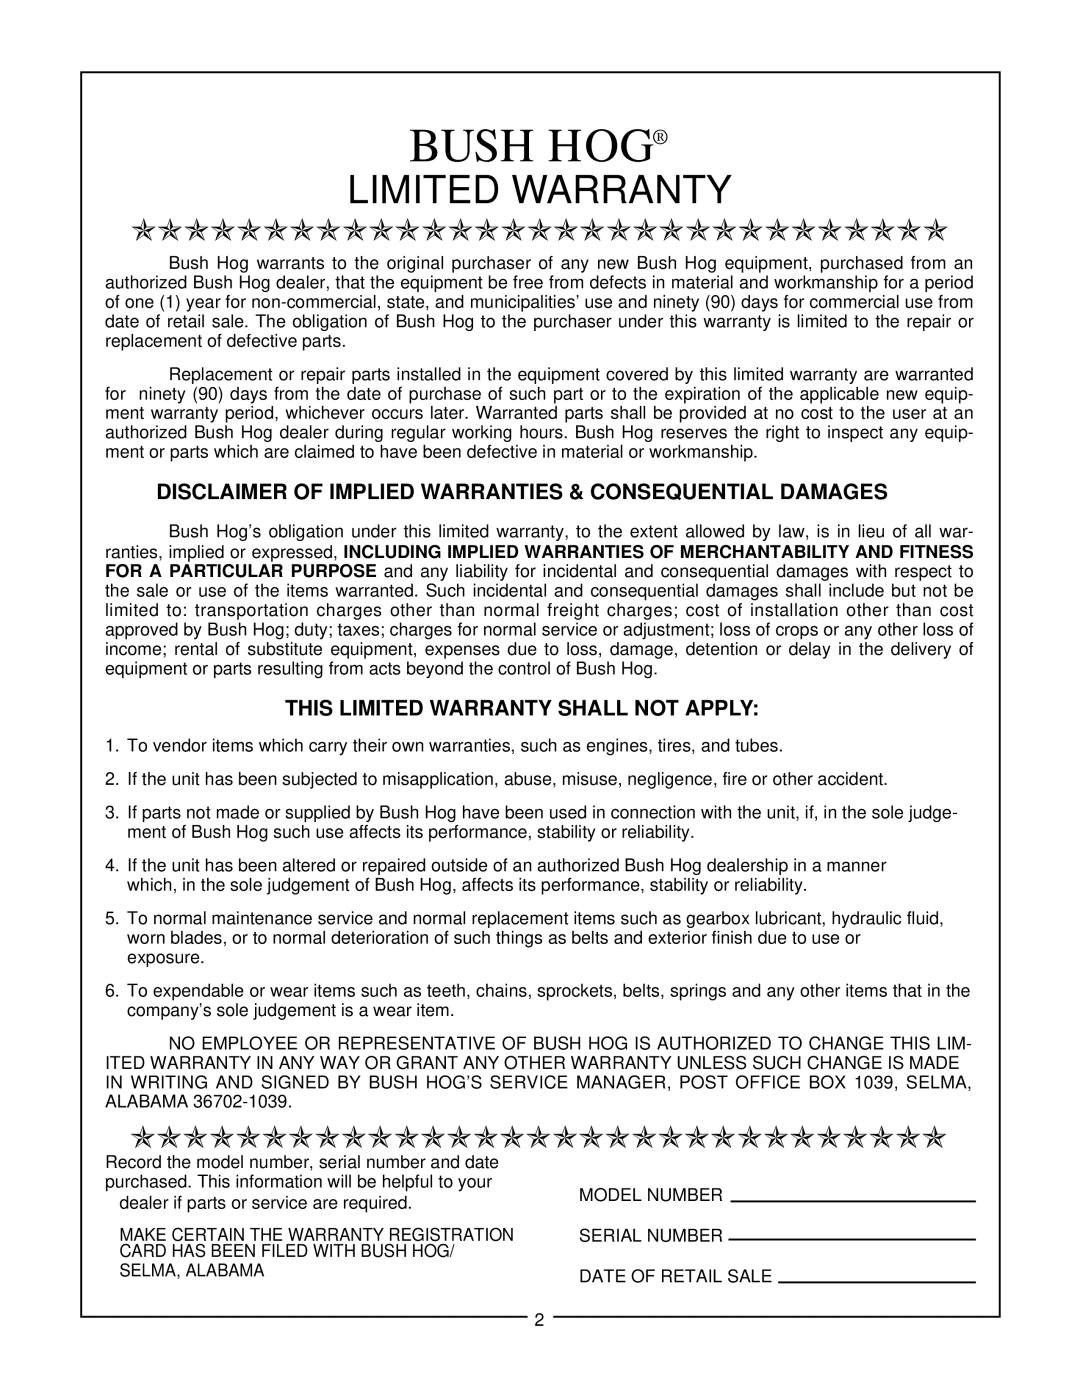 Bush Hog HM2007, HM2008, HM2009 manual Bush Hog, Limited Warranty, Disclaimer Of Implied Warranties & Consequential Damages 